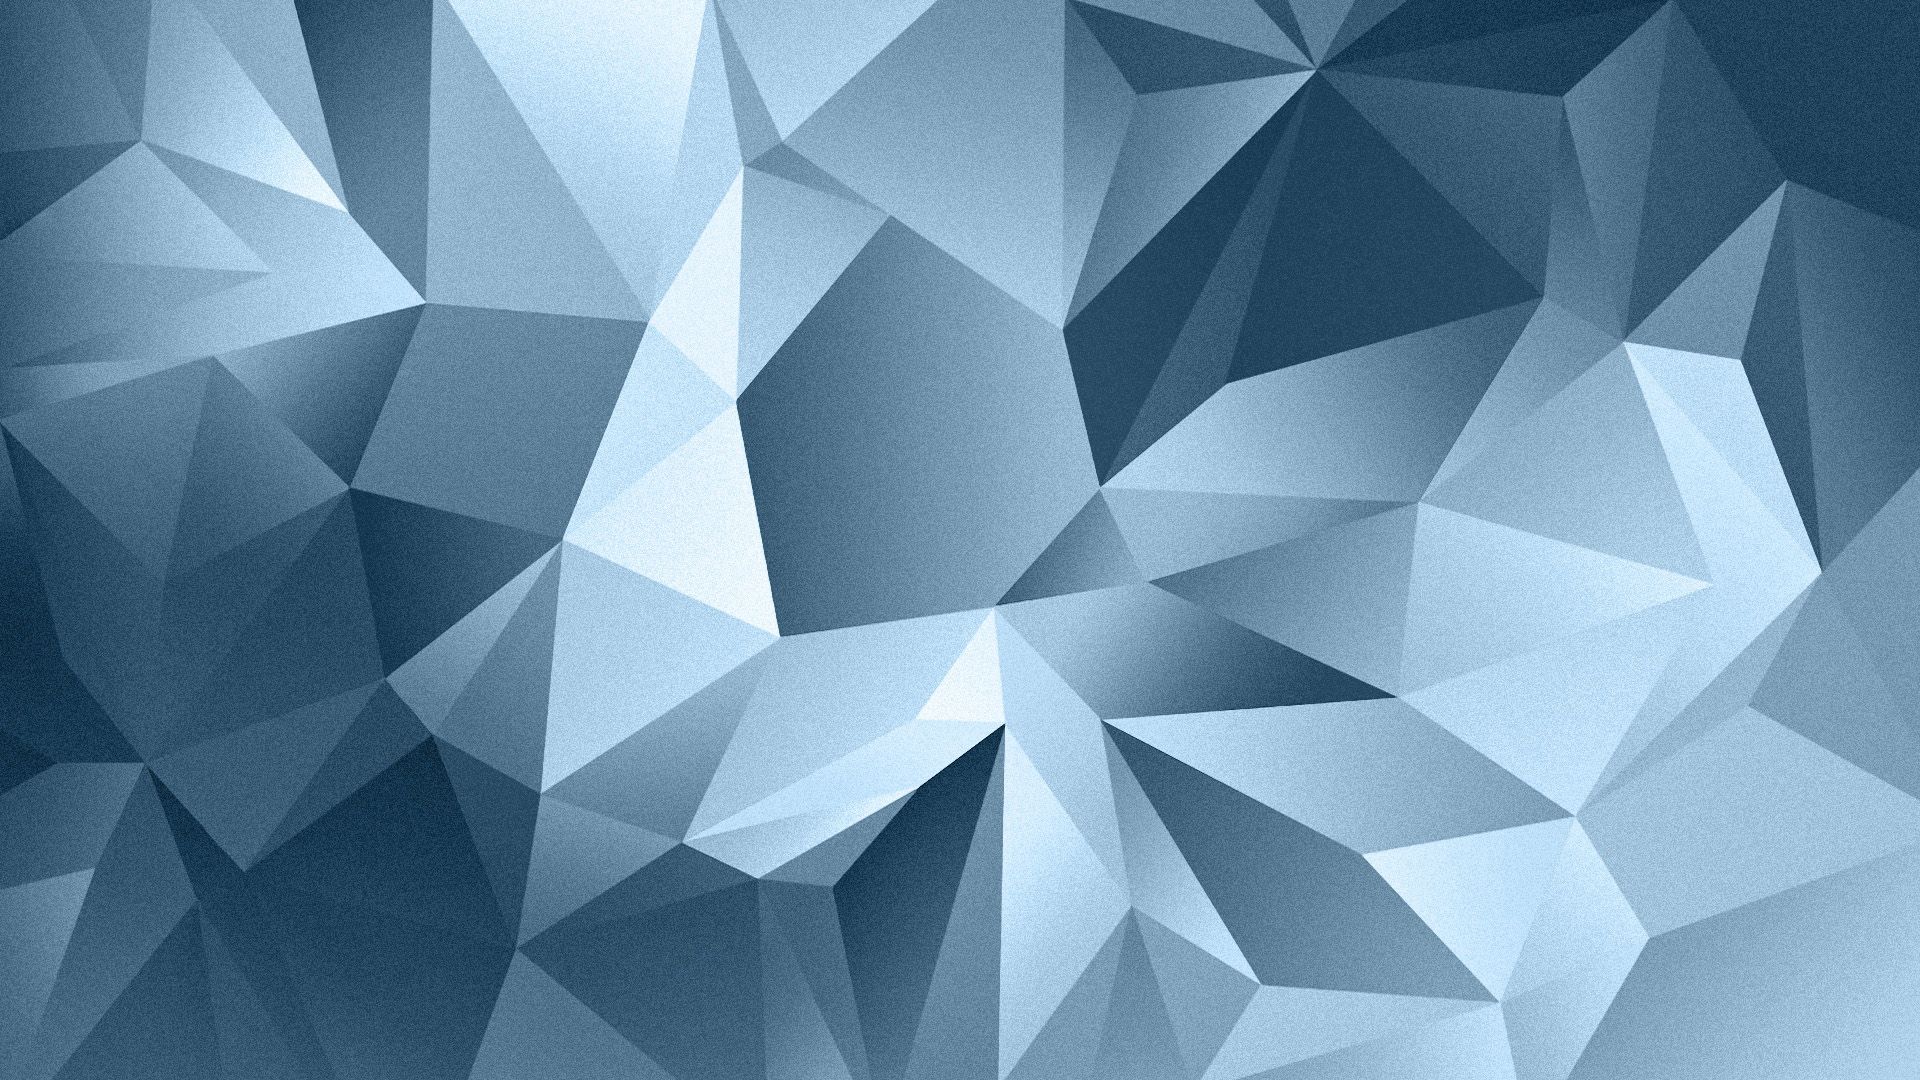 Diamond Pattern Wallpapers